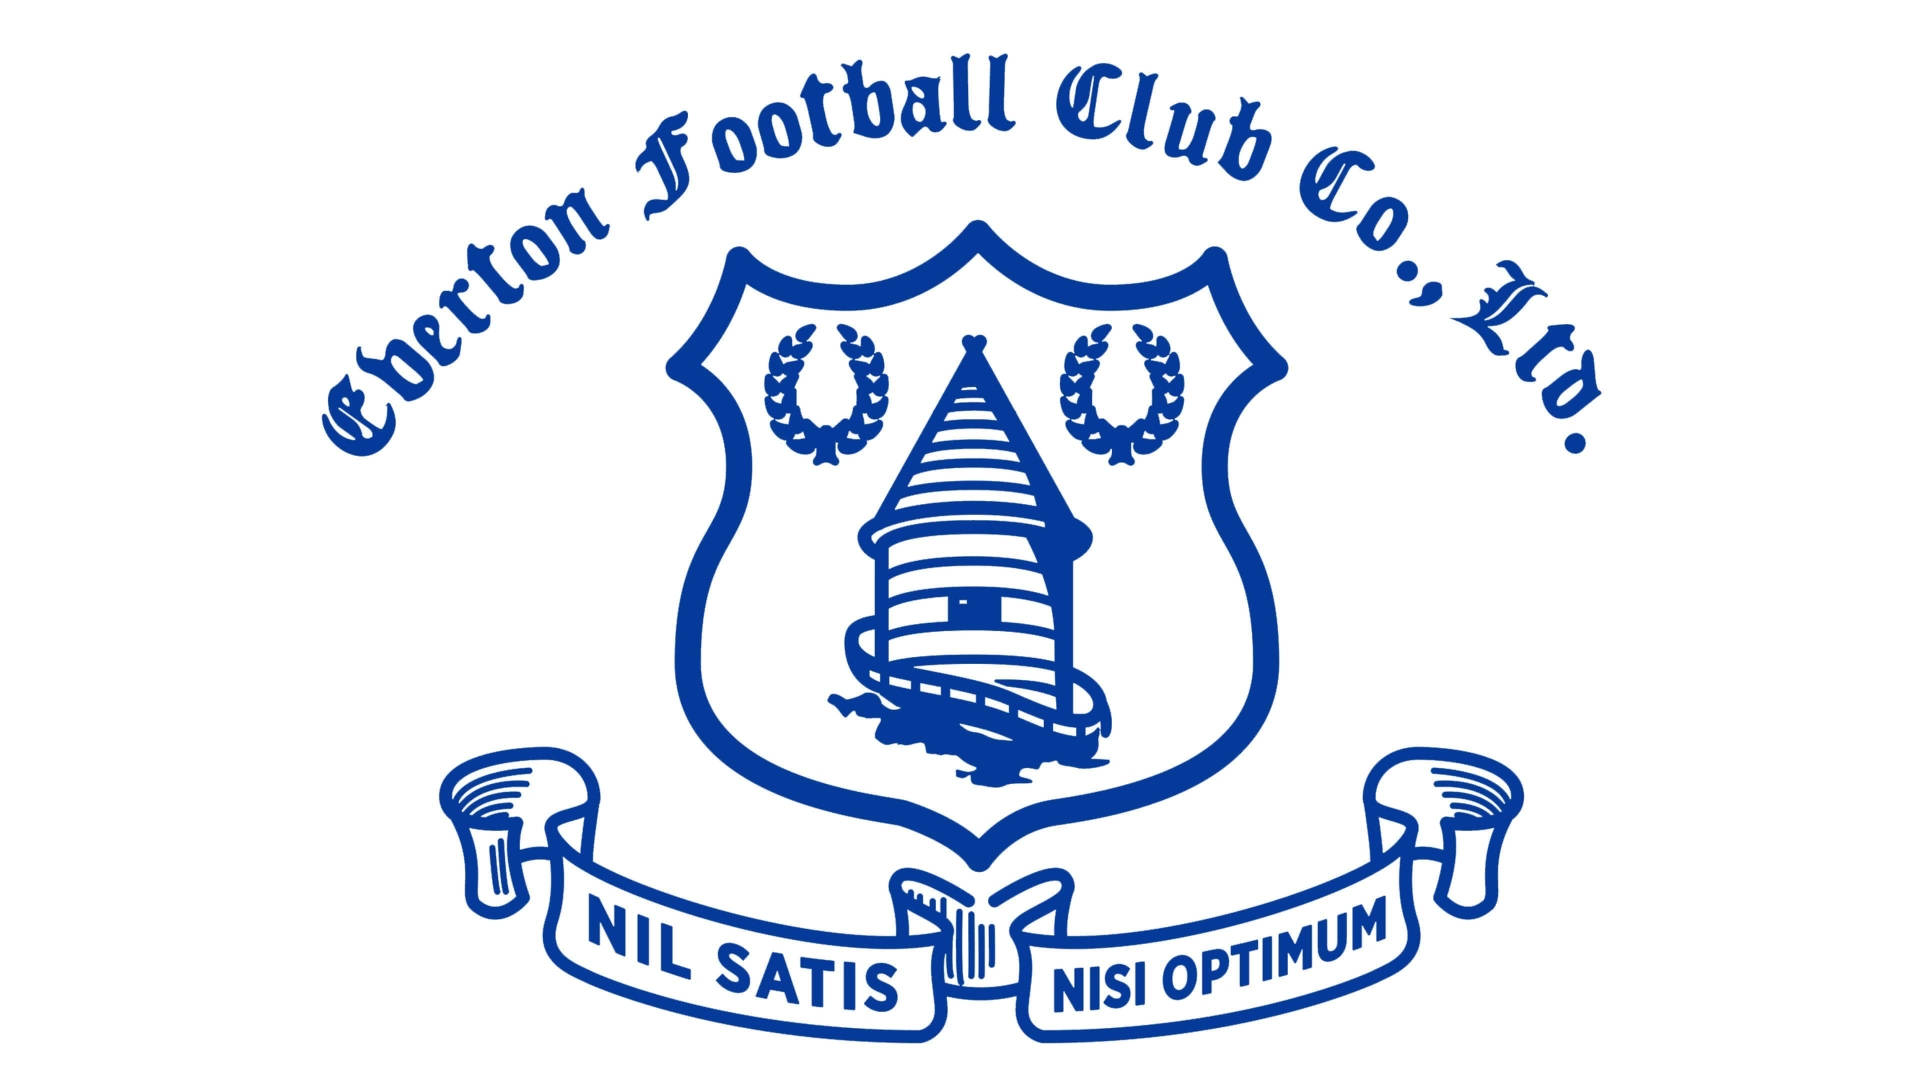 Monochrome Everton F.c Crest